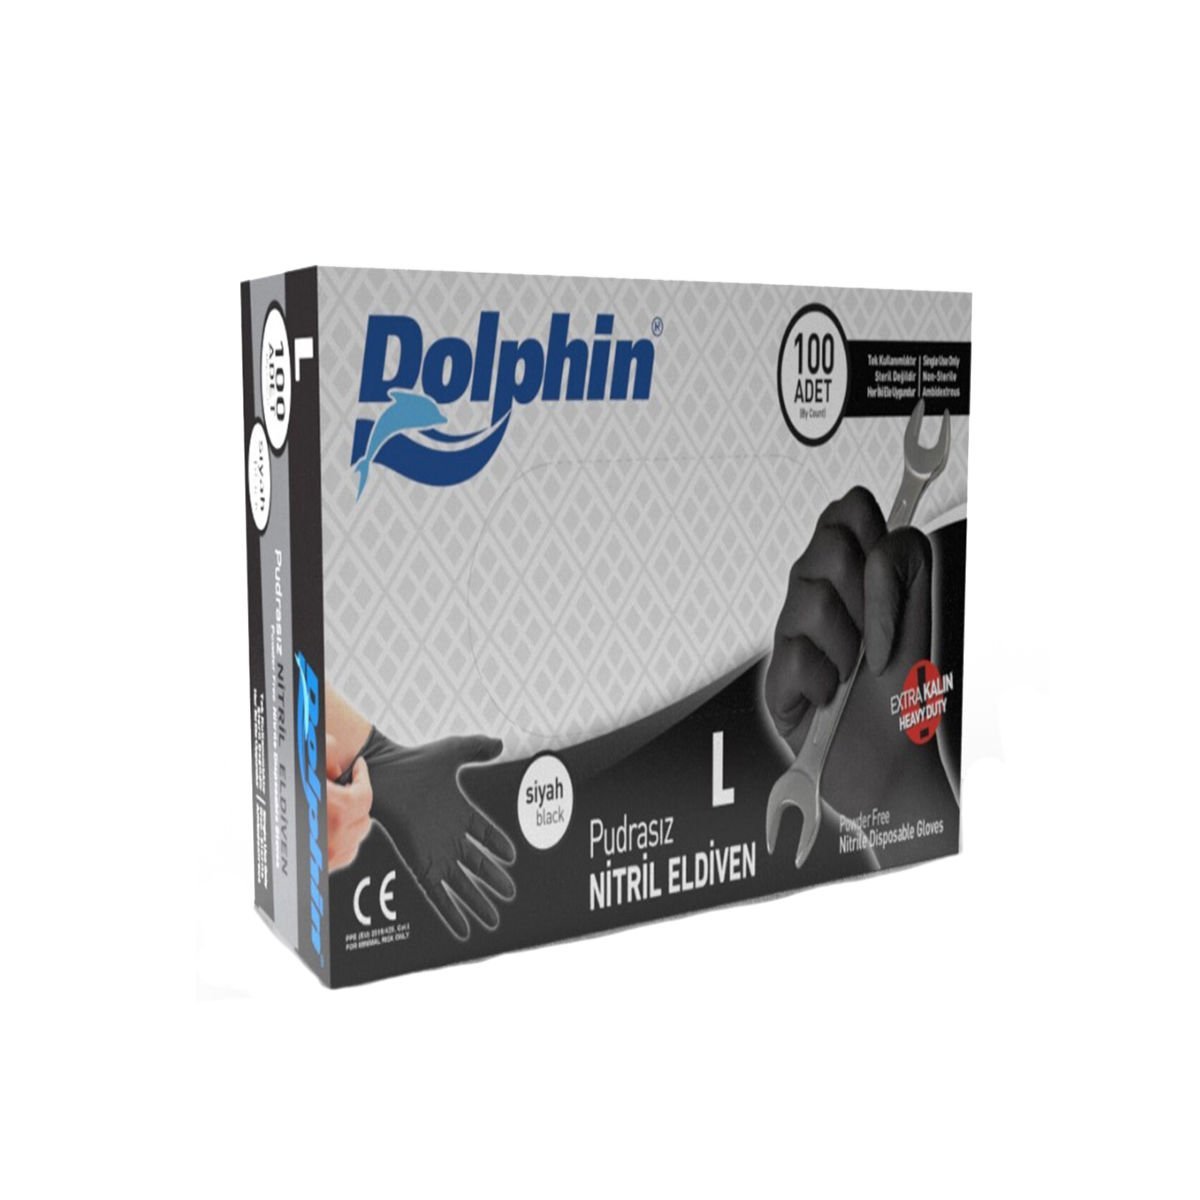 Dolphin Pudrasız Extra Kalın Siyah Nitril Eldiven, L (100 Adet)